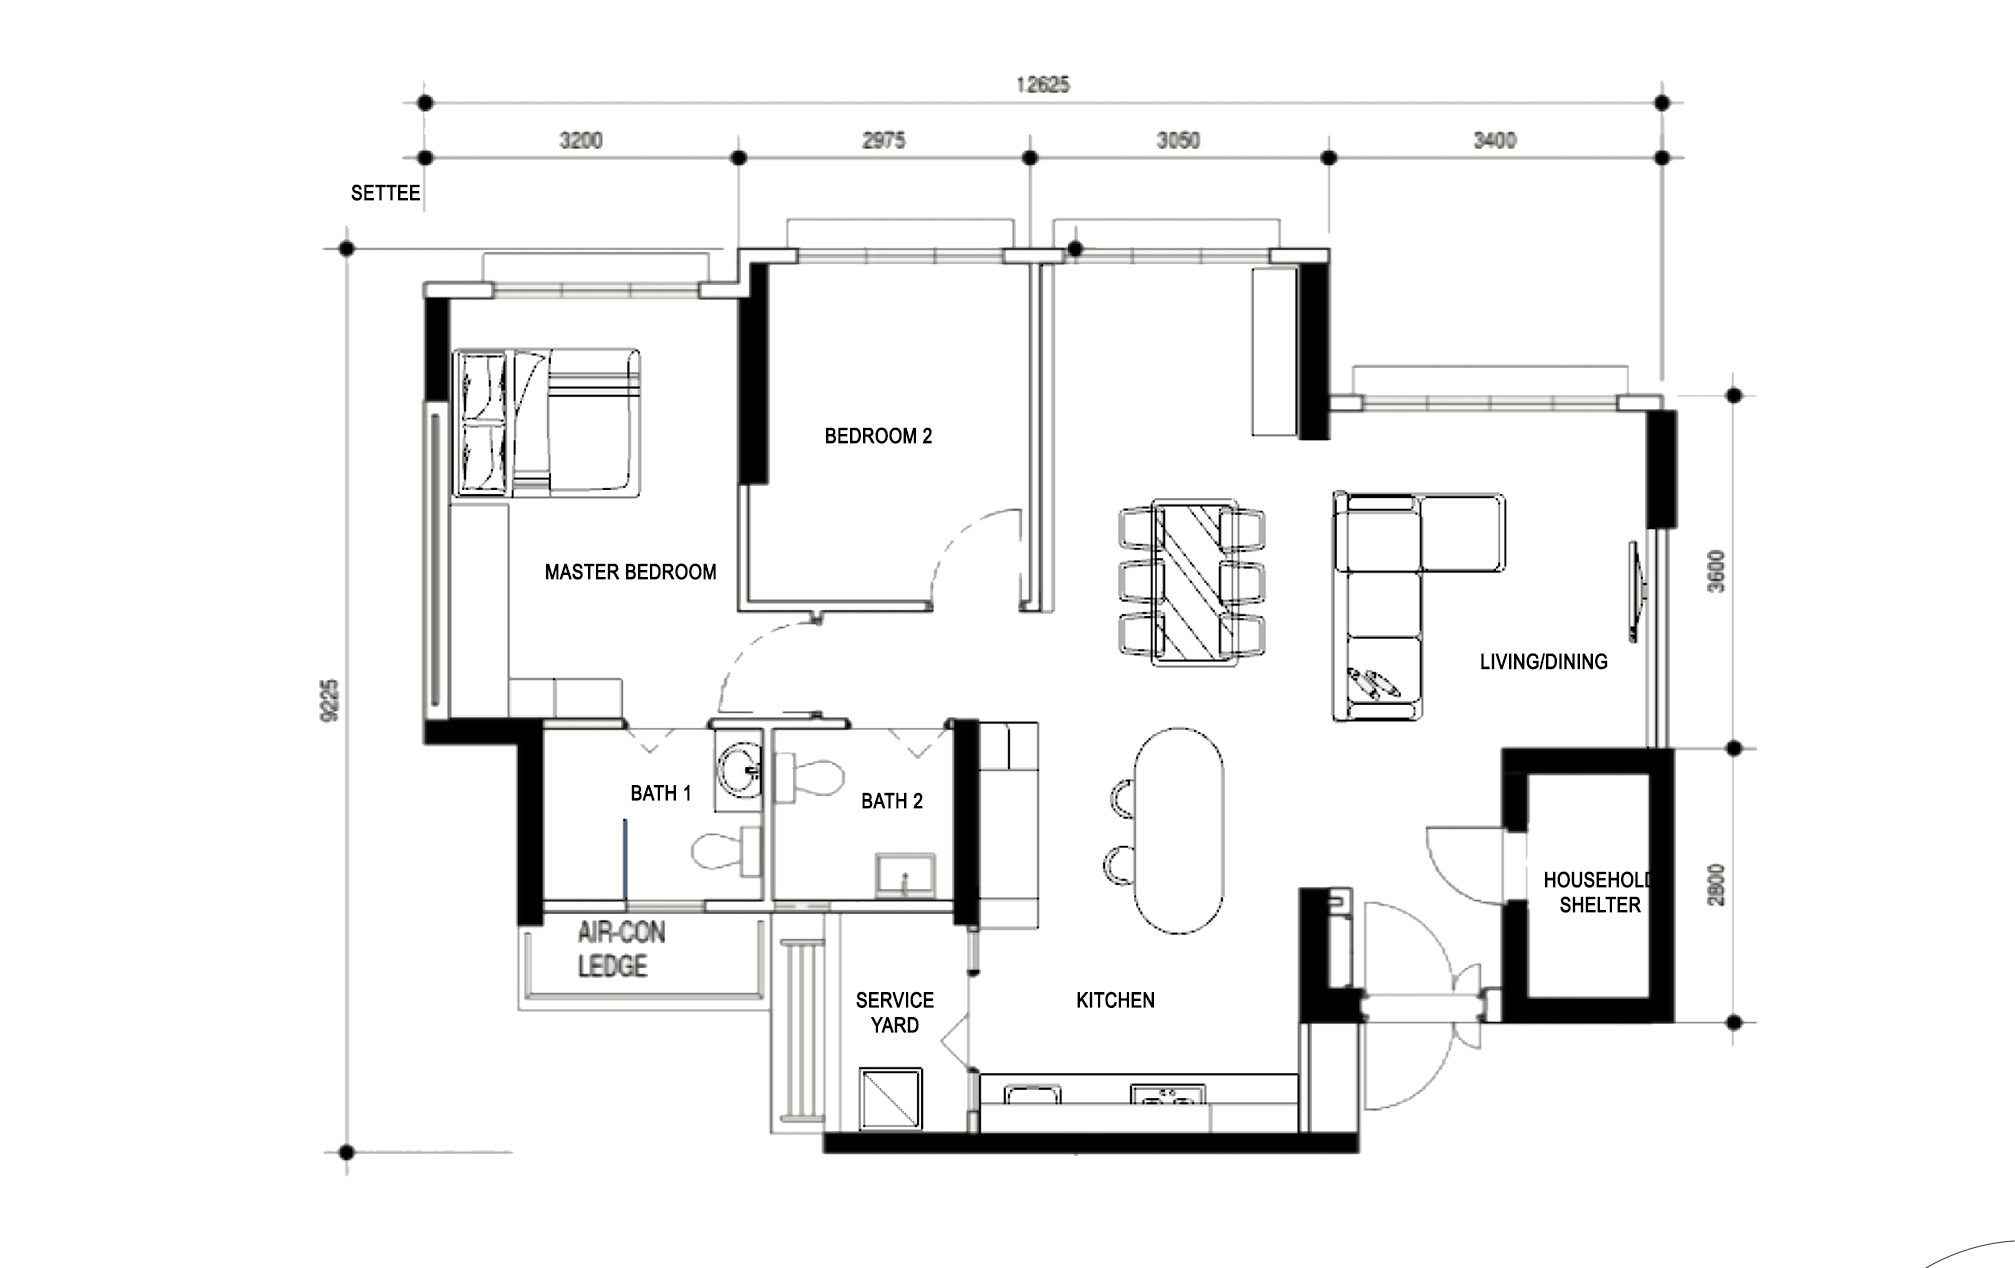 squarerooms cozyspace bedok south 4 room bto flat hdb floor plan layout